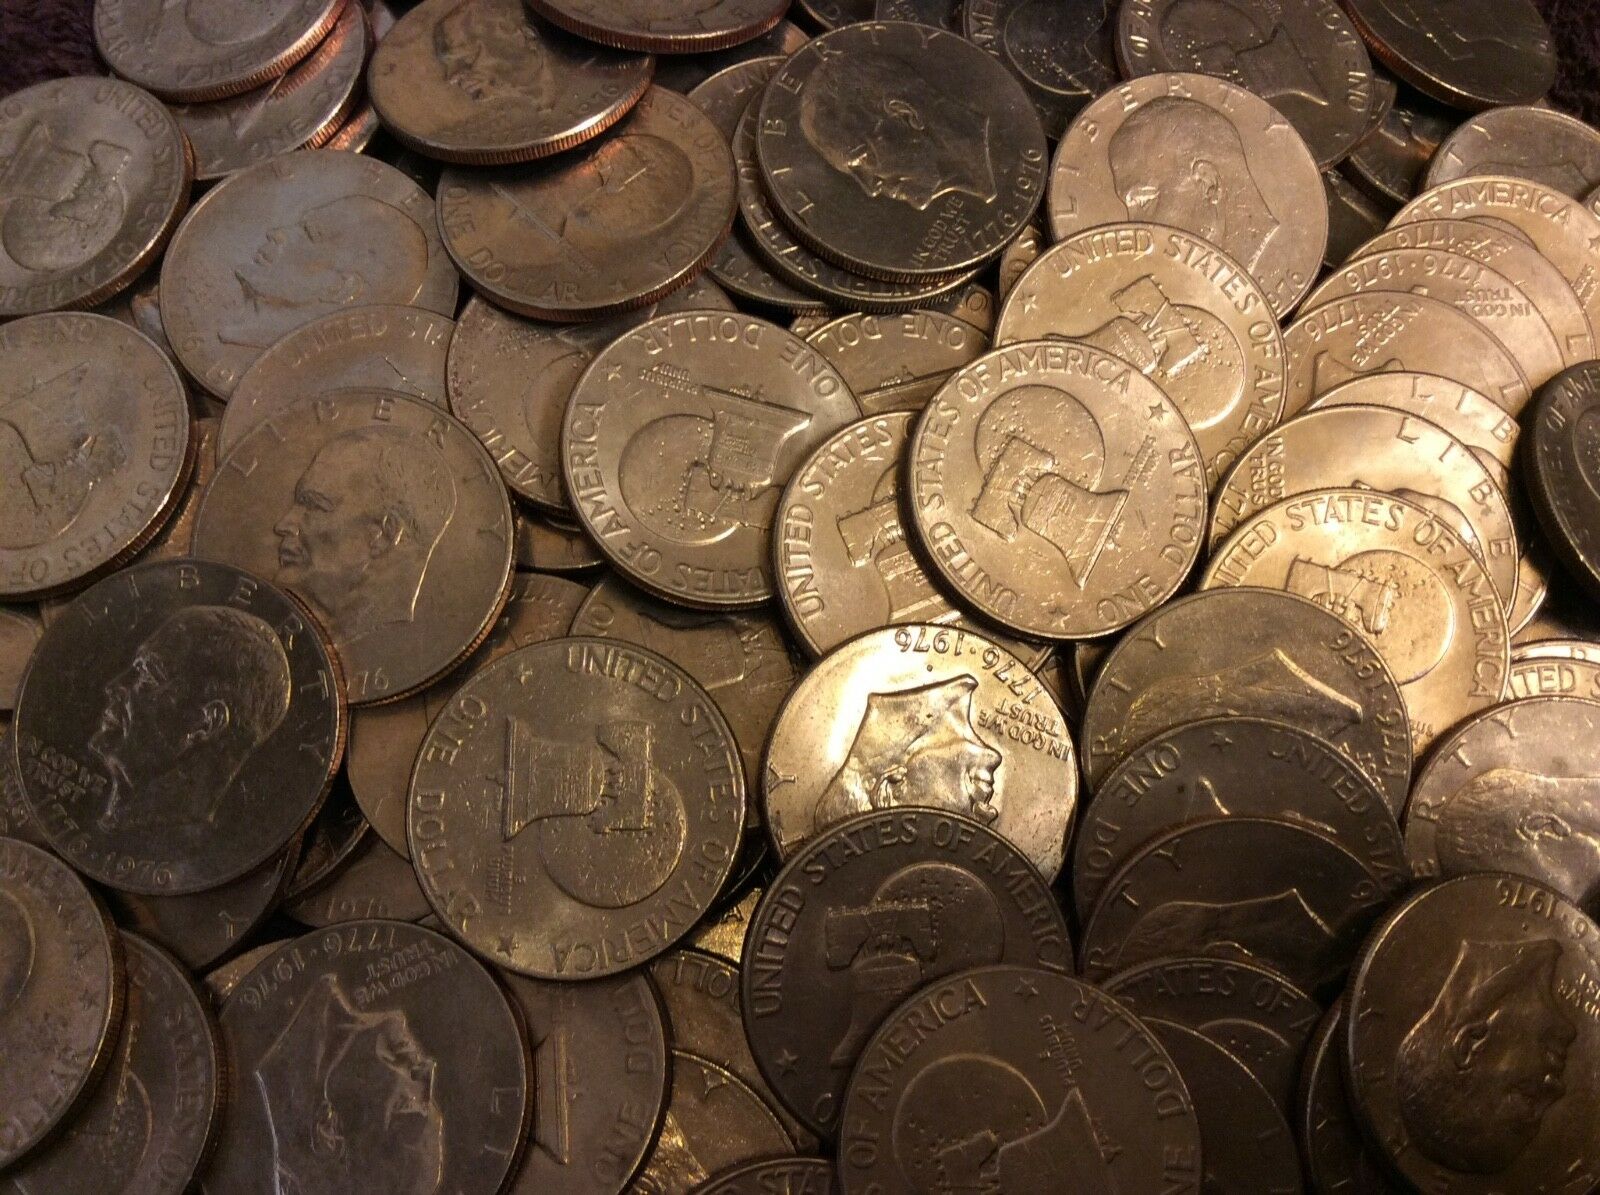 Free Coin Tubes 100  Bicentennial Type 1 Eisenhower (ike) $$’s Circulated Lot